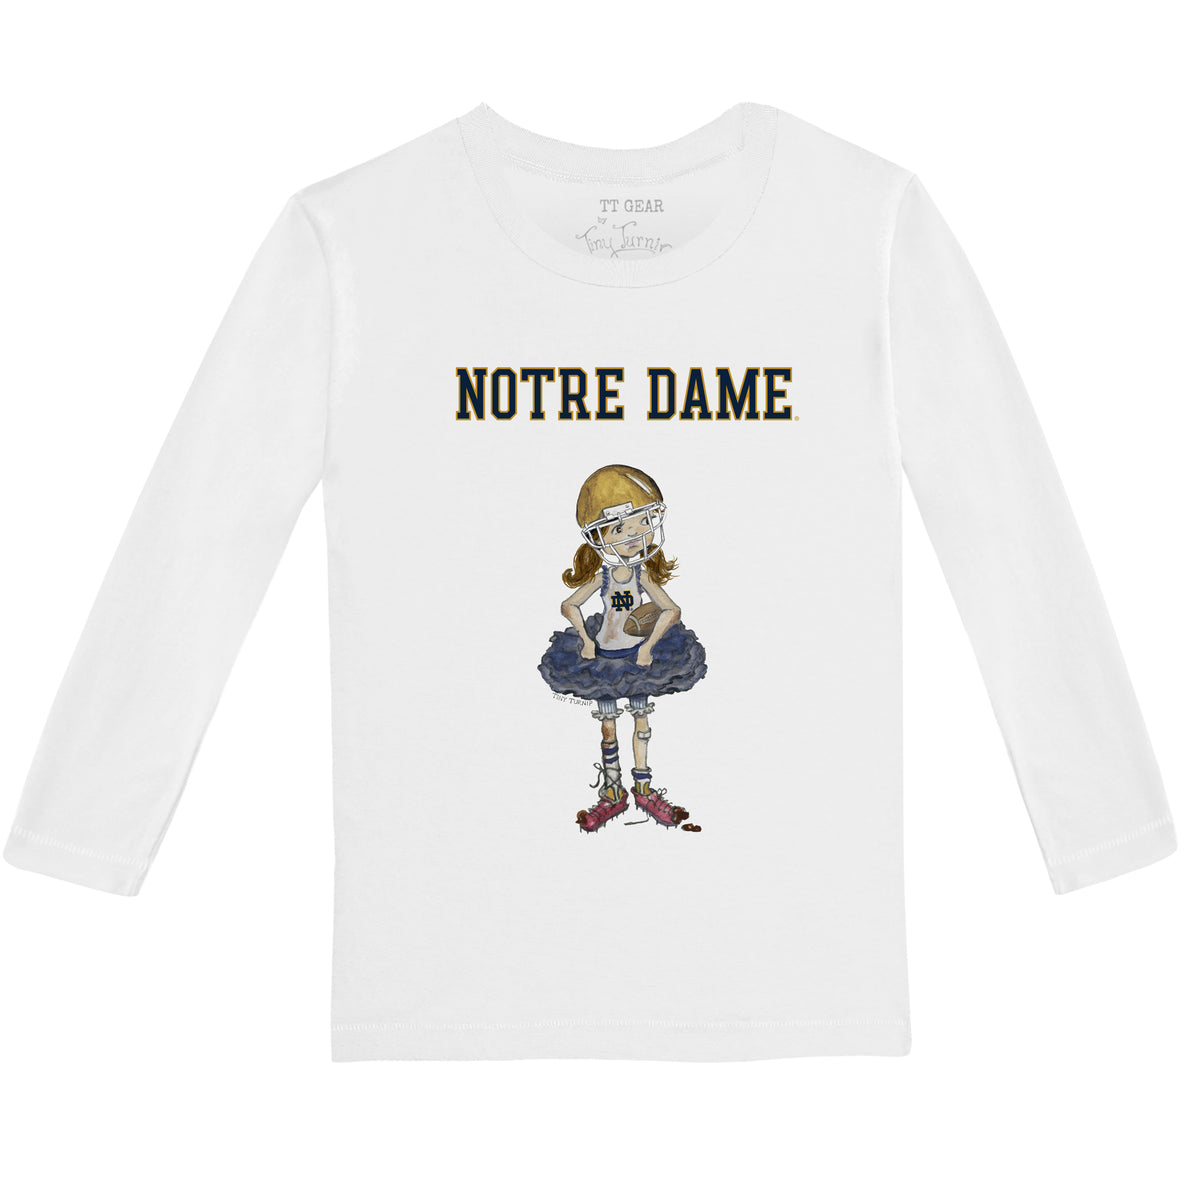 Notre Dame Fighting Irish Babes Long-Sleeve Tee Shirt